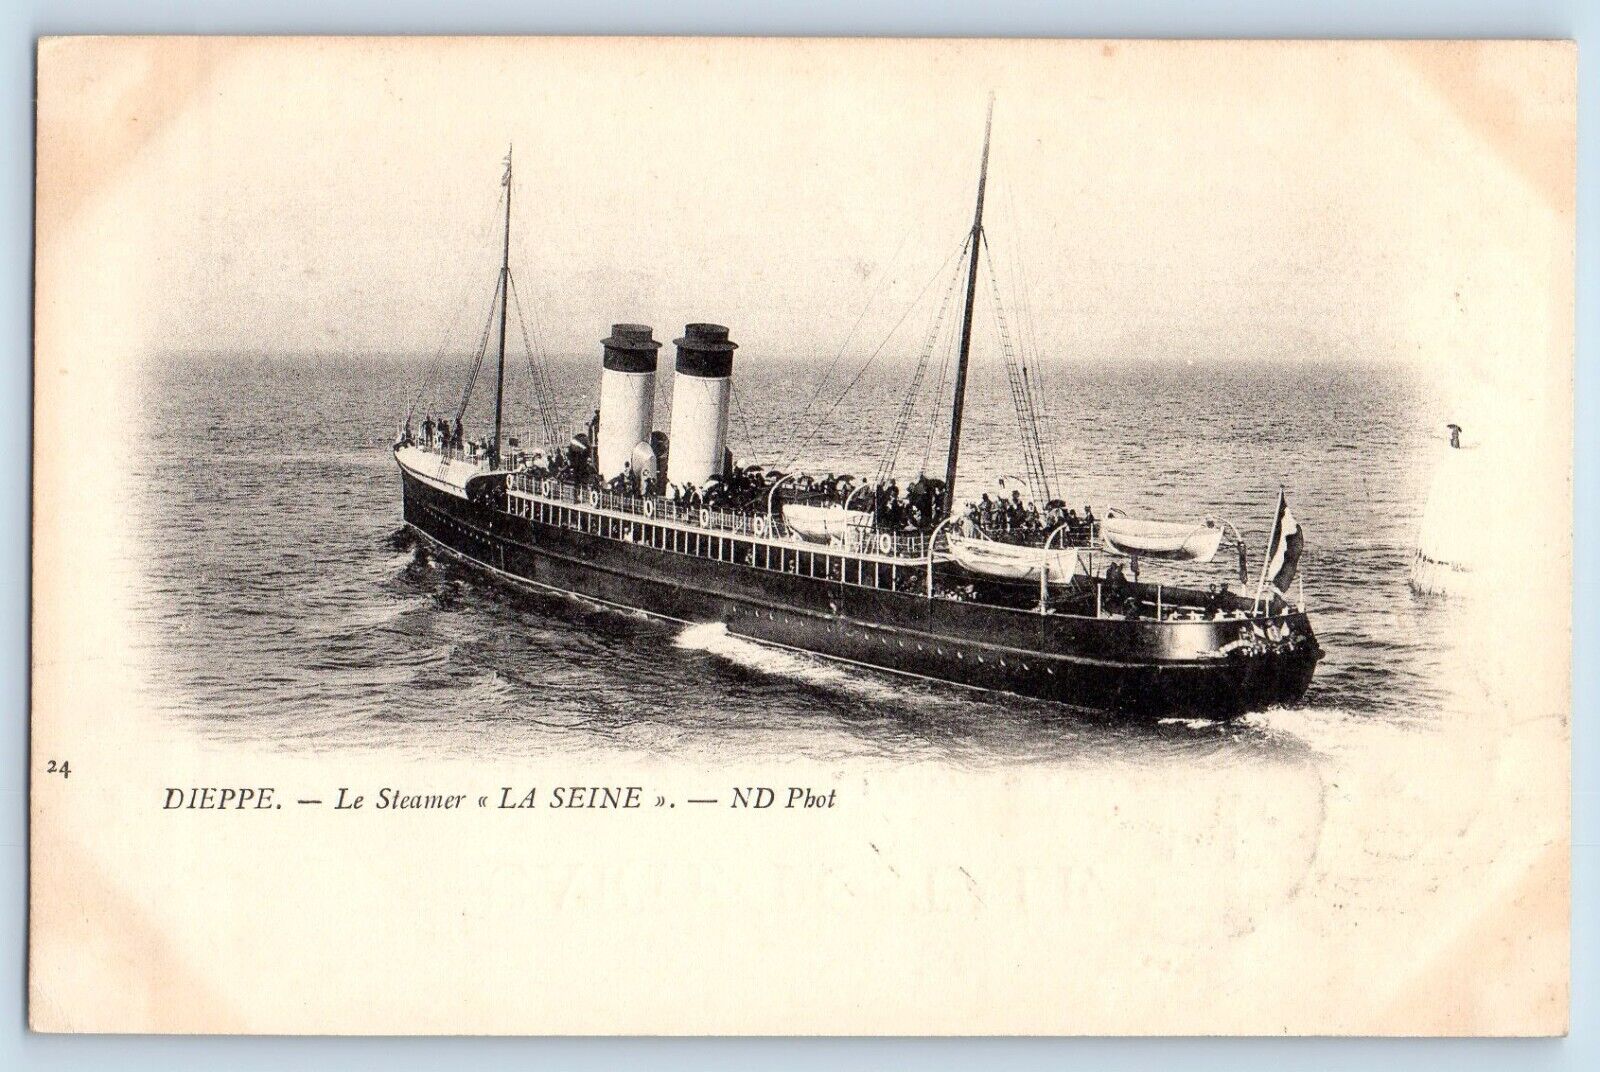 Dieppe Seine-Maritime Normandy France Postcard The Seine Steamer 1902 Posted